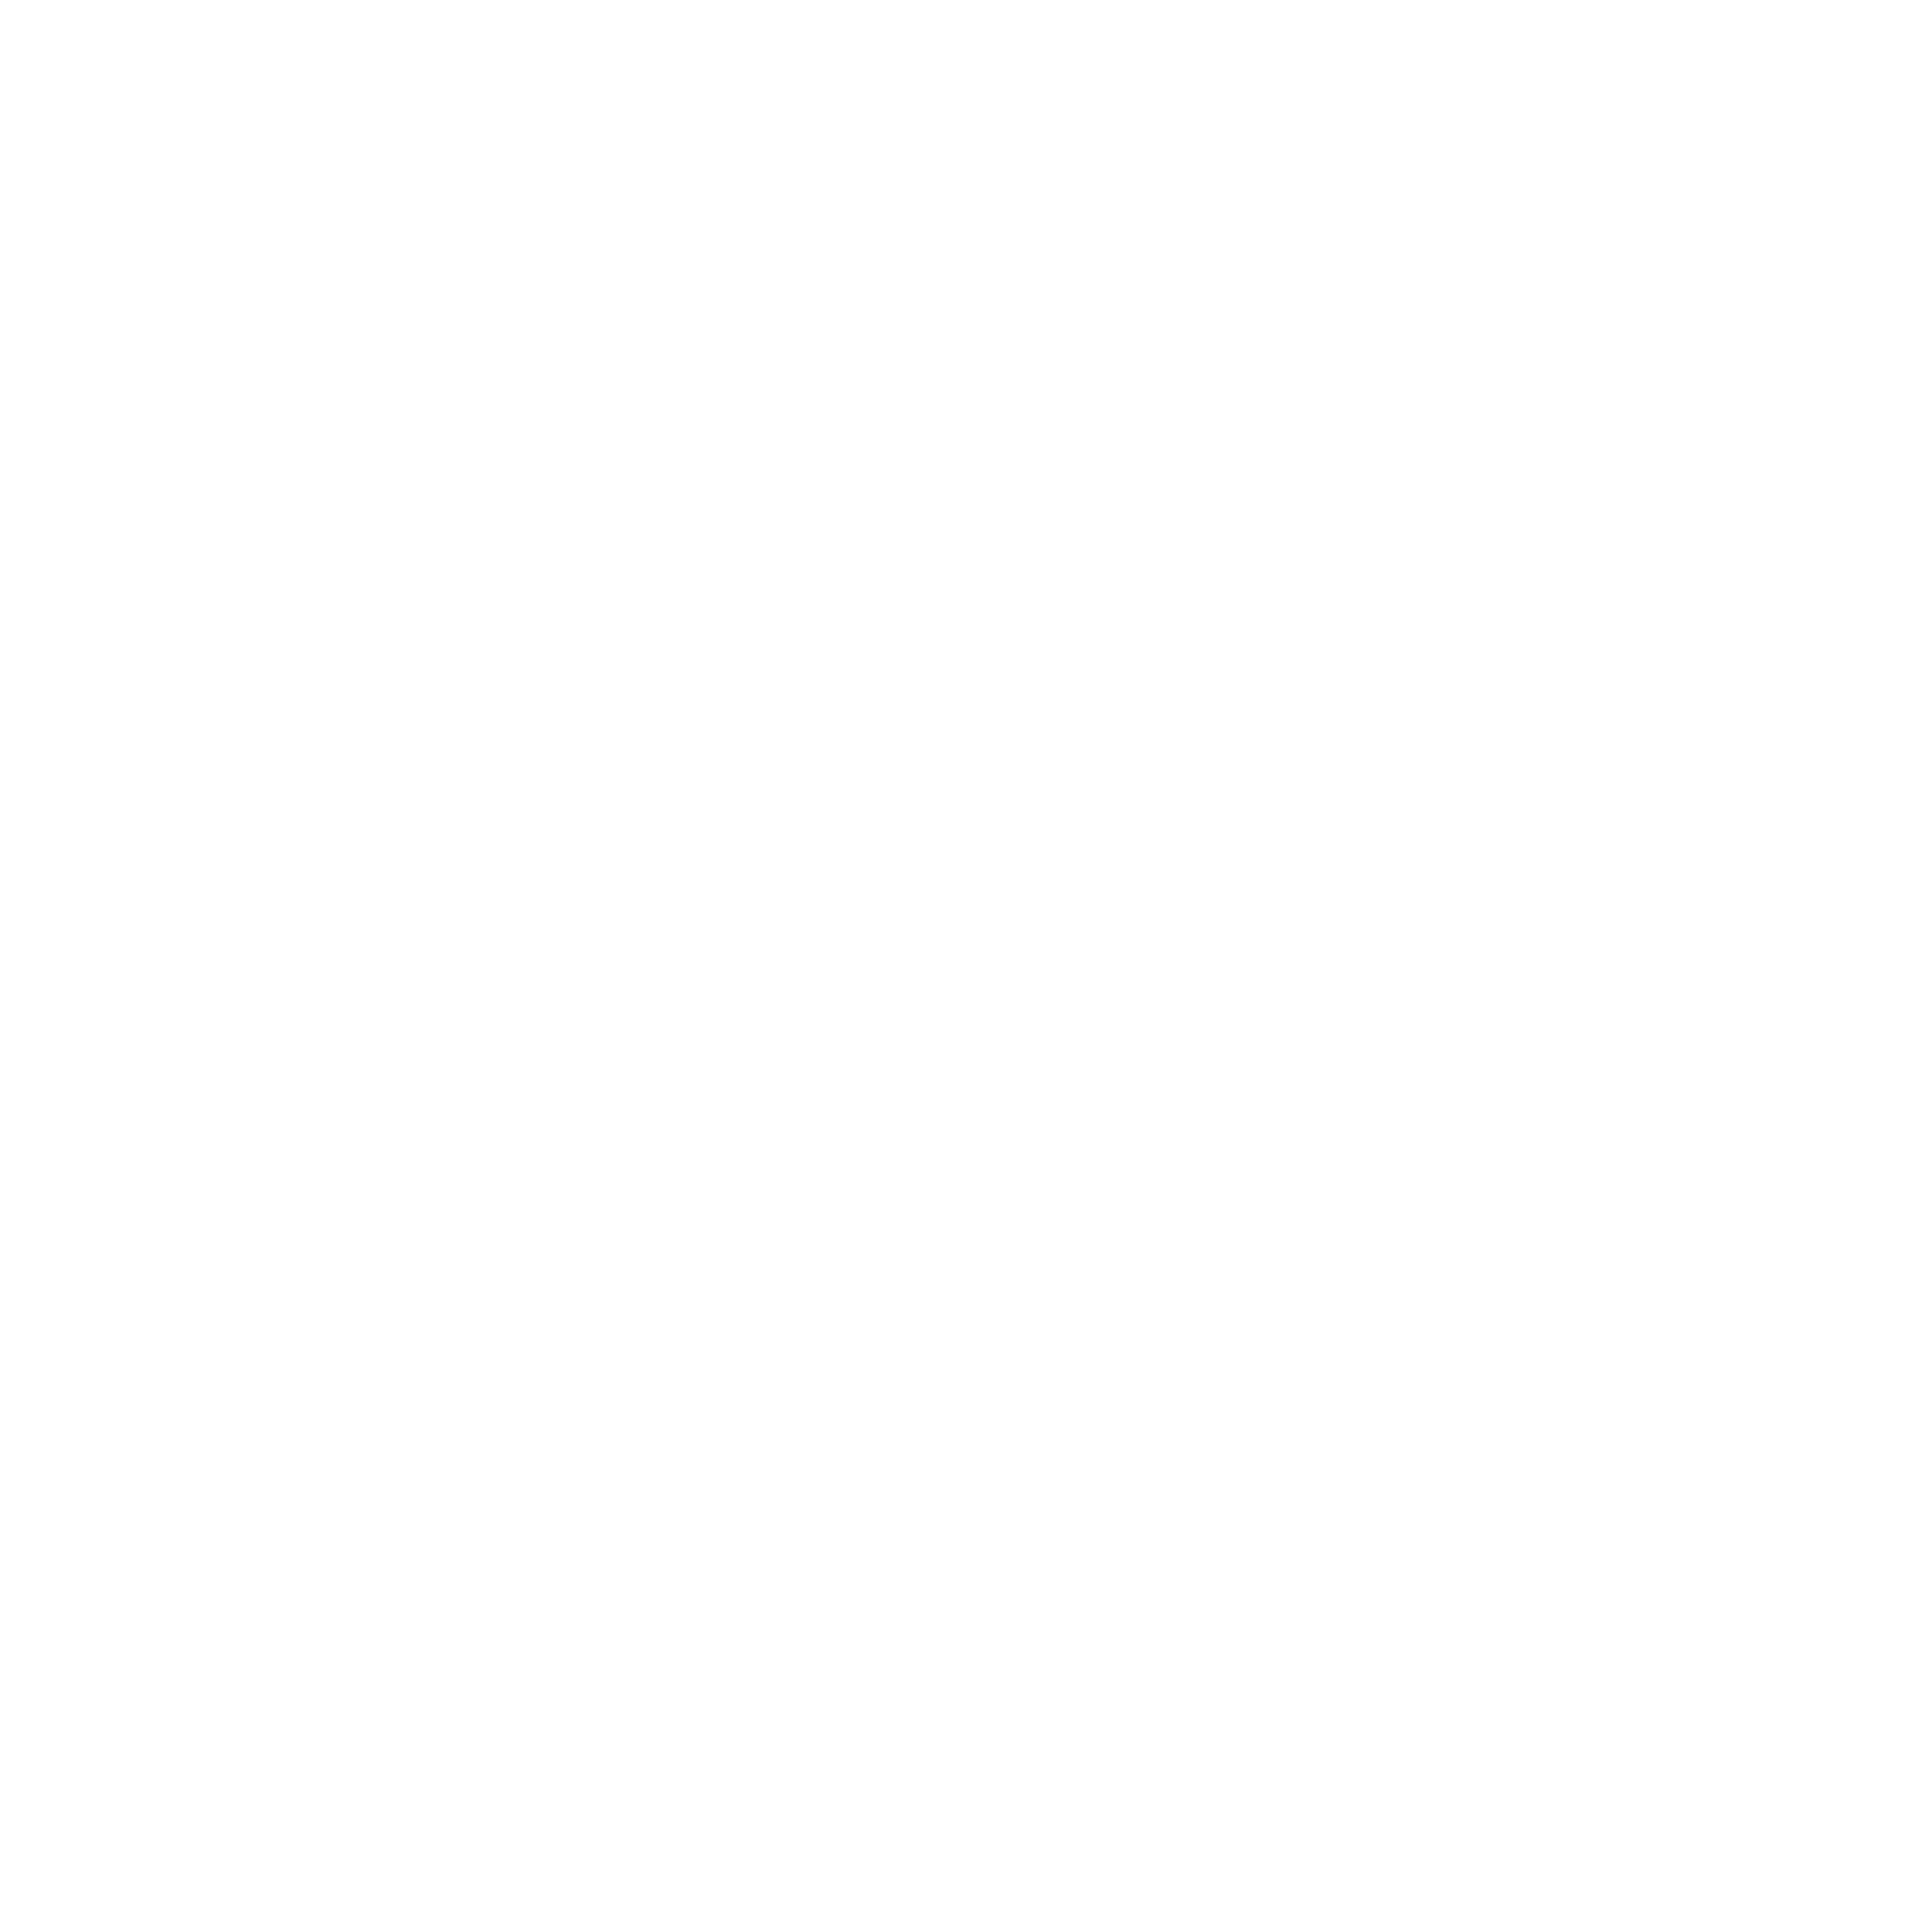 Koruna Cycle & Telecom